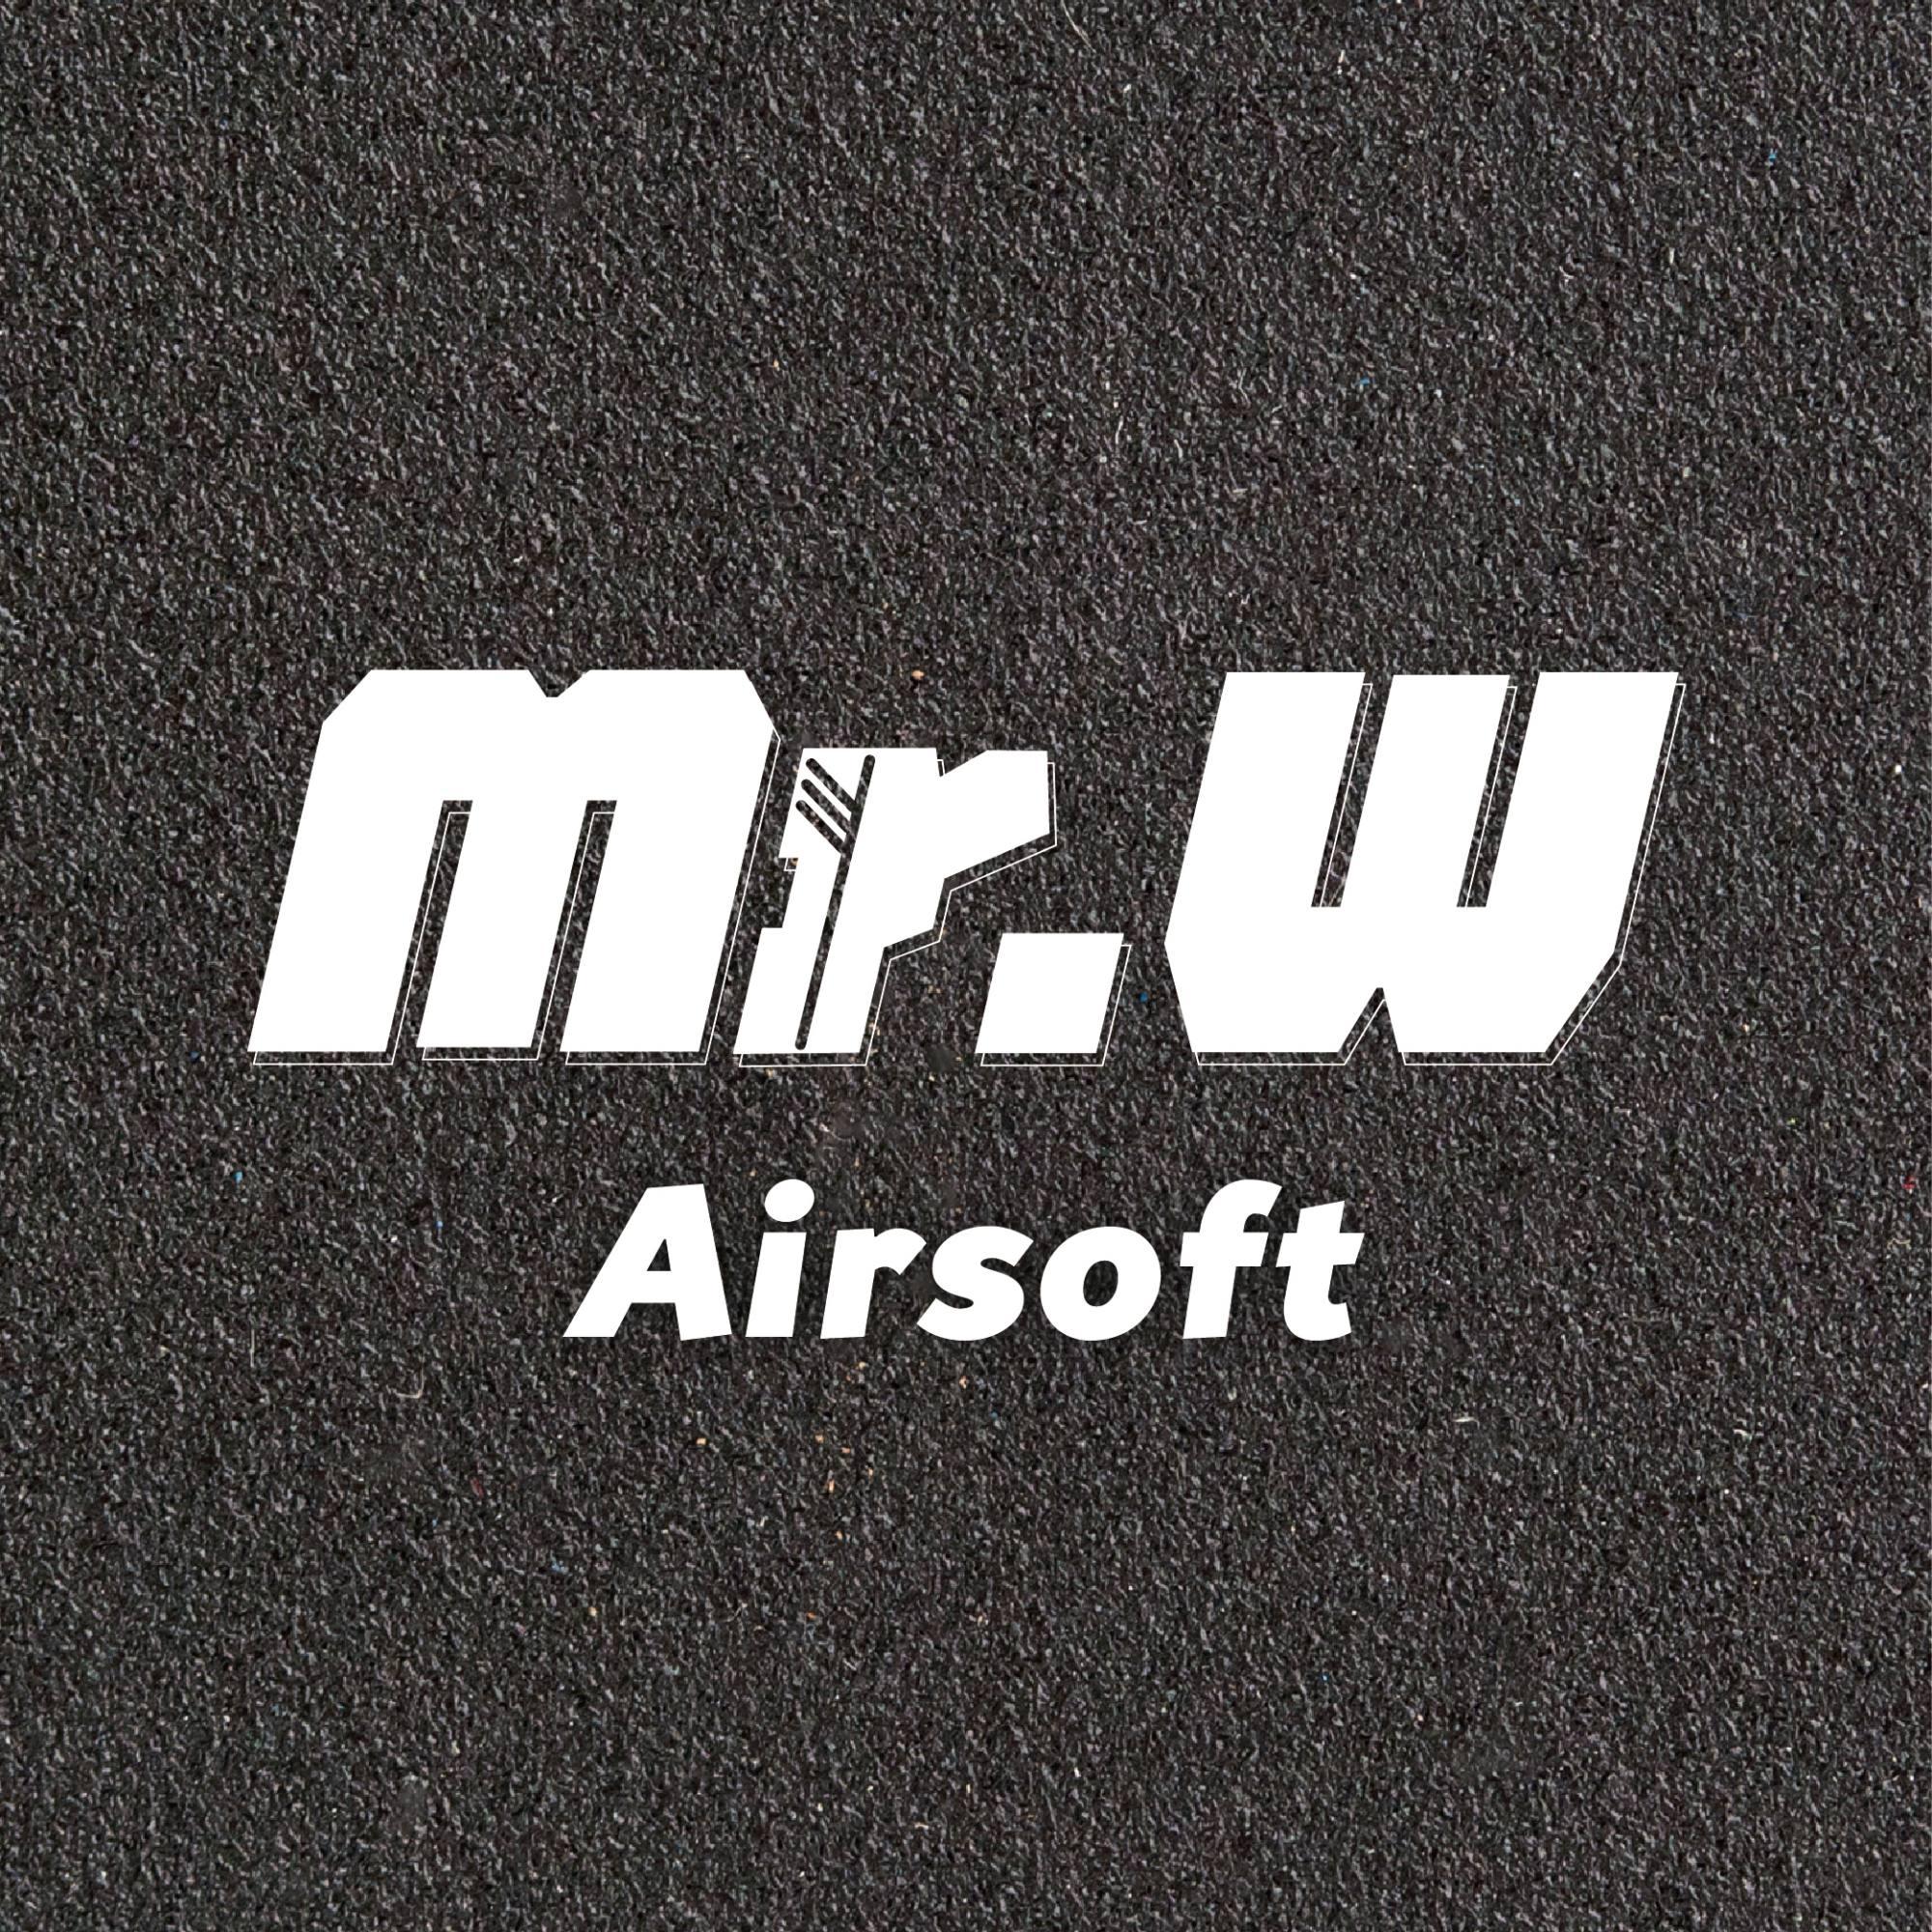 Mr.W Airsoft